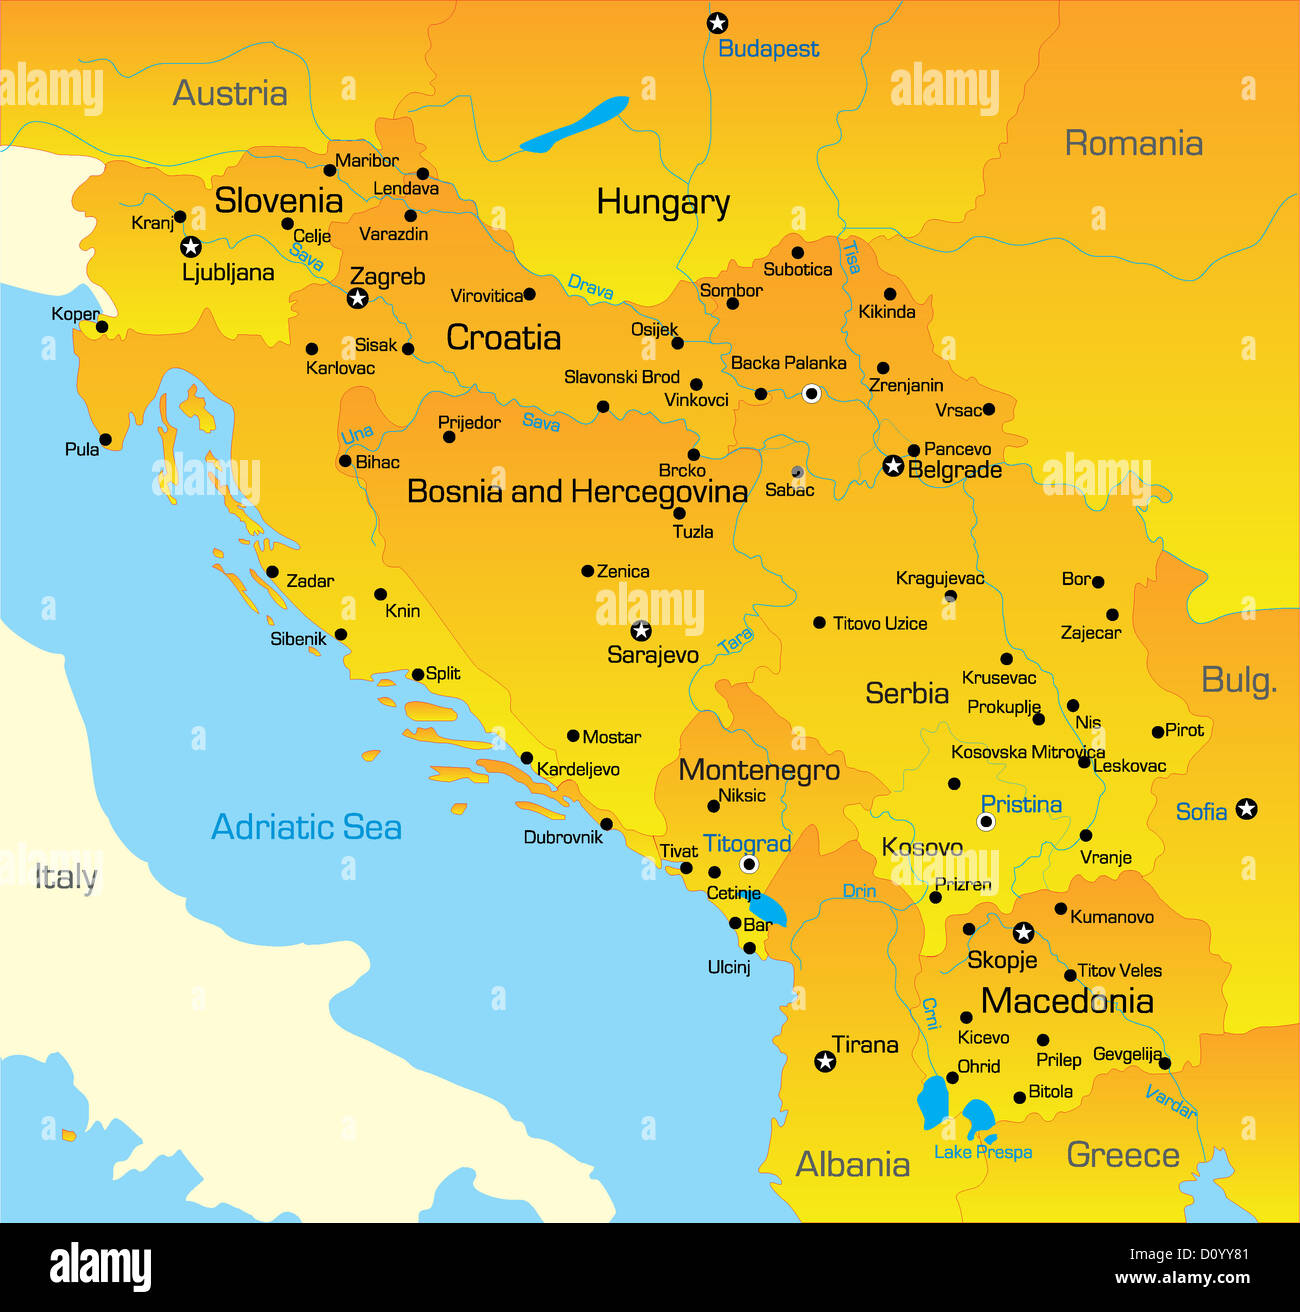 mapas-de-balcanes-colecci-n-de-mapas-de-balcanes-europa-mapas-del